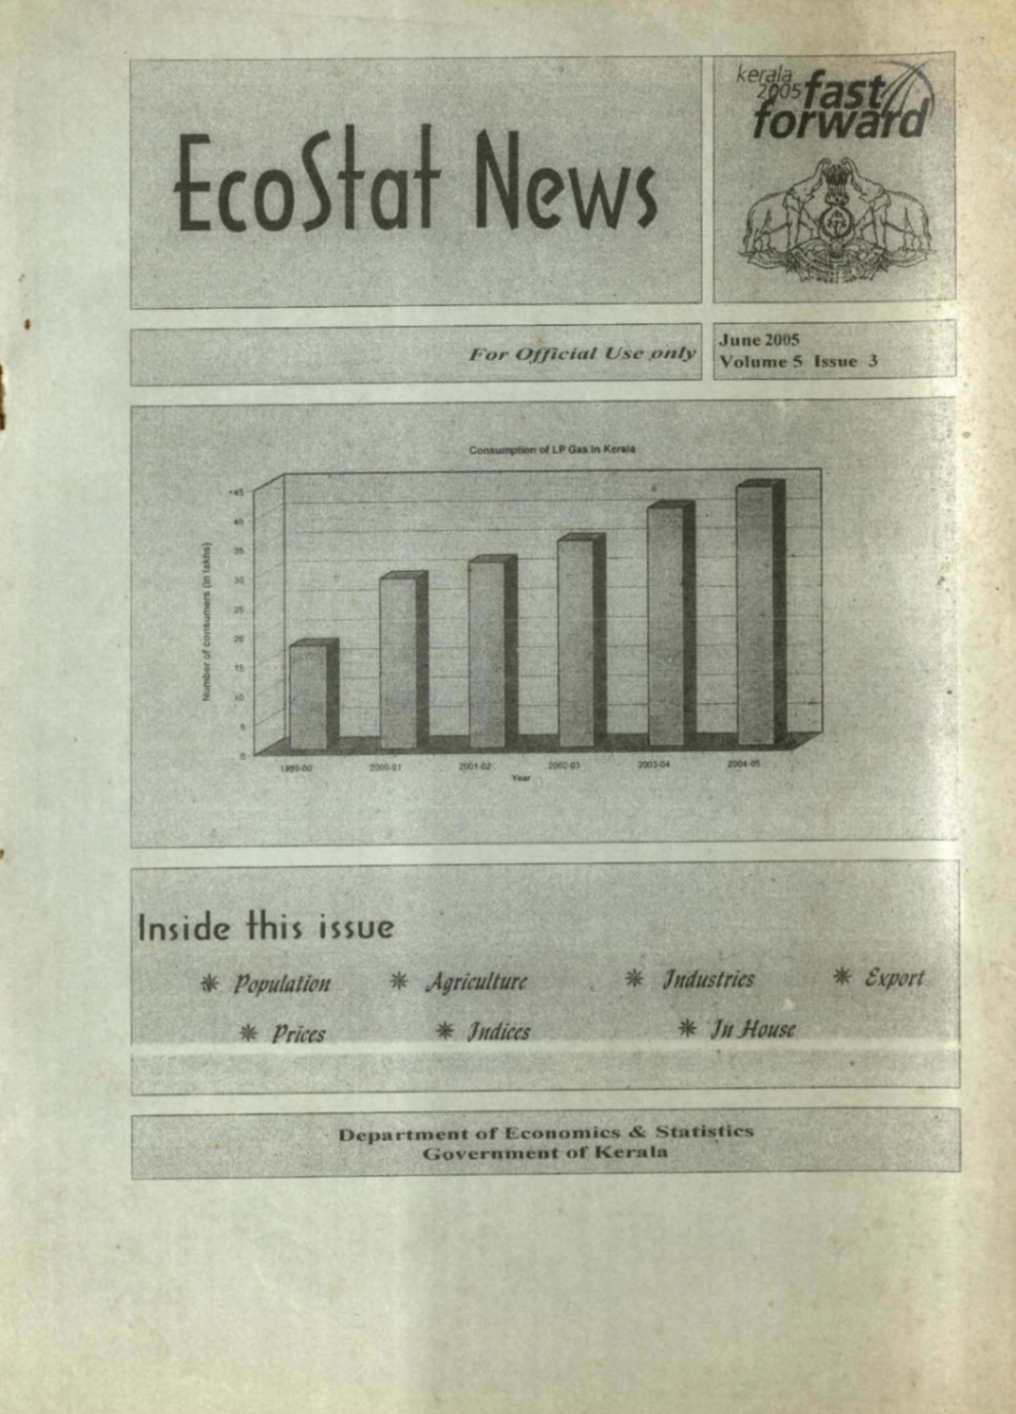 Ecostat News June 2005